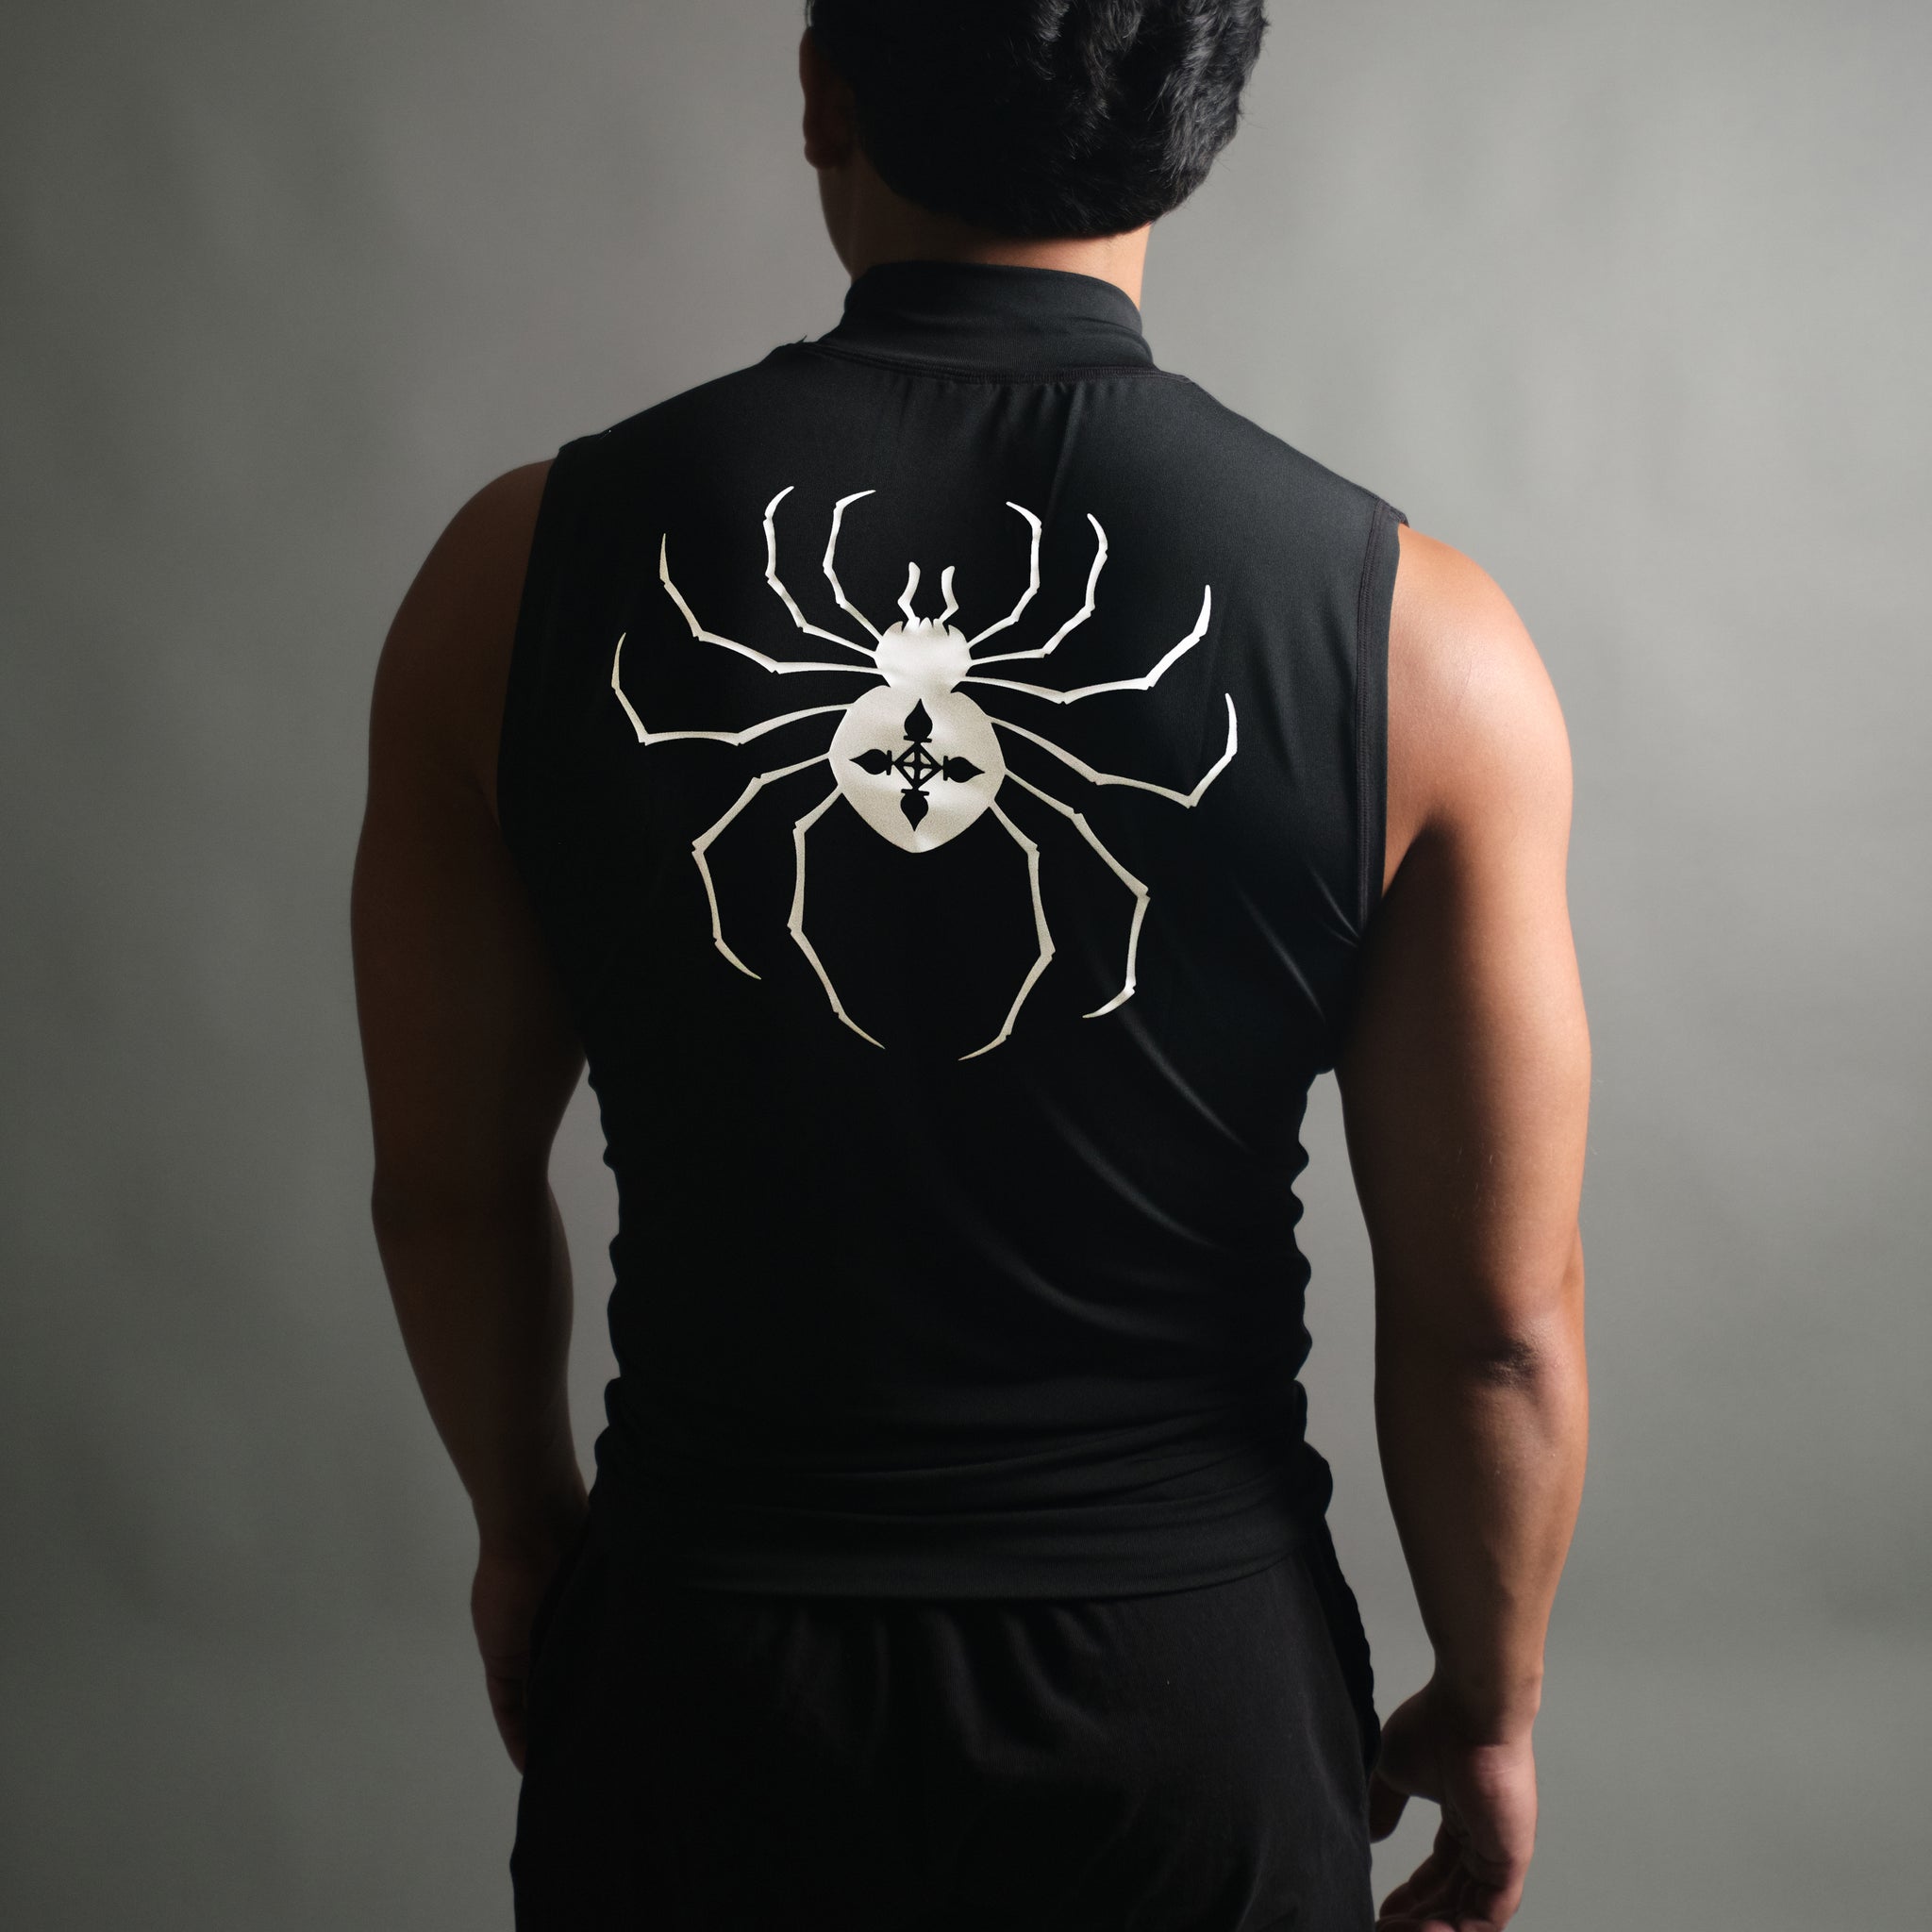 Chrollo Spider Mockneck Compression Sleeveless in Black